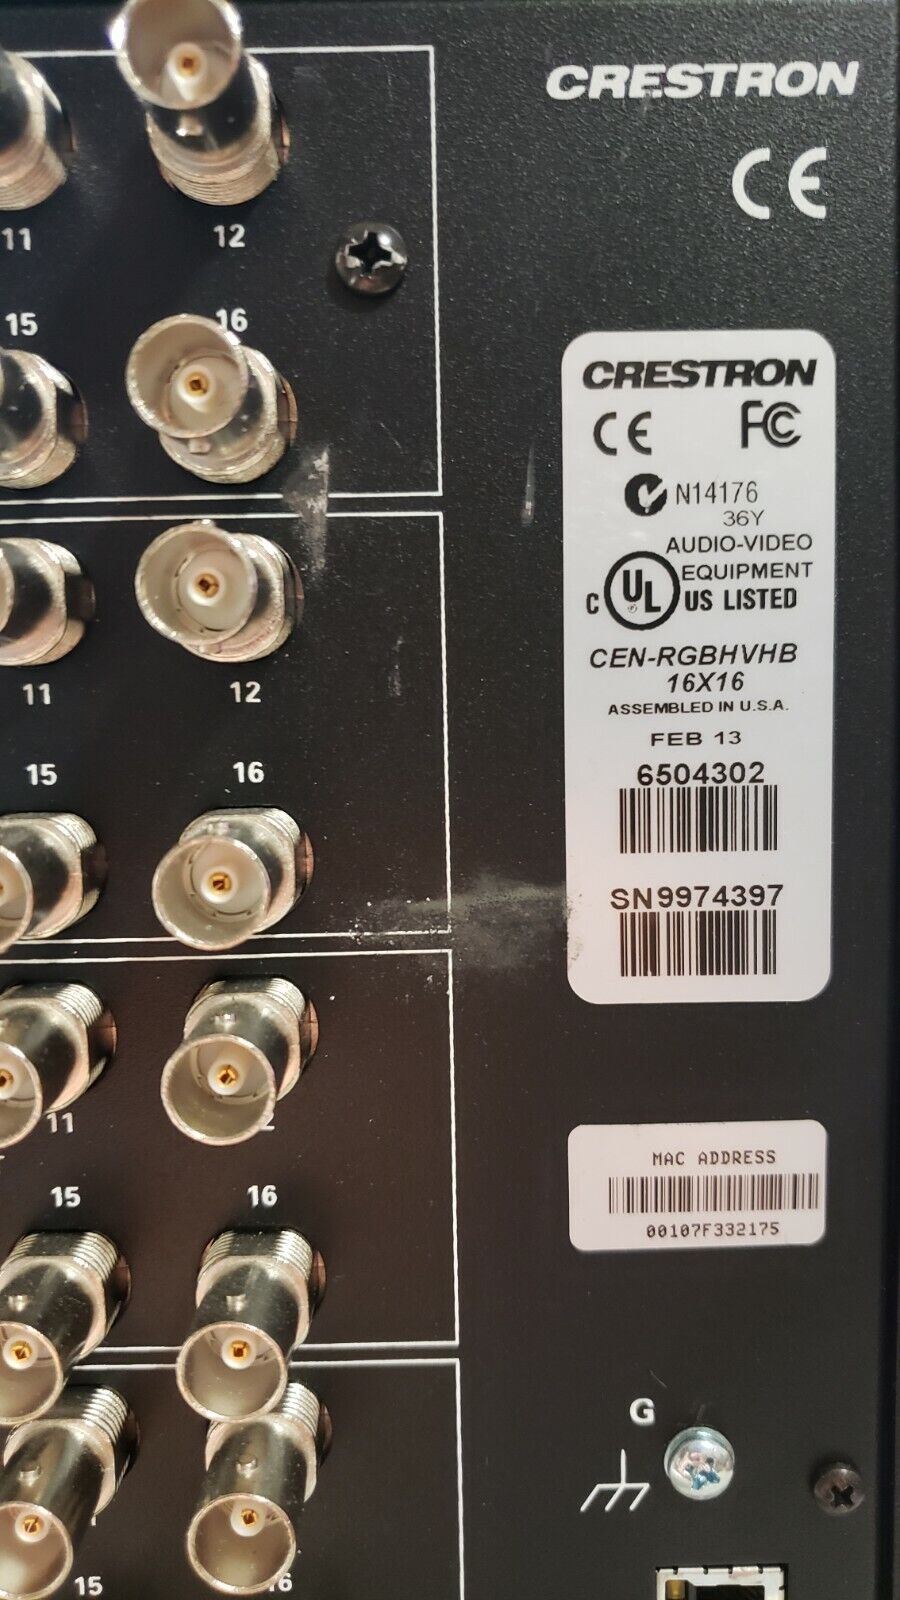 Crestron CEN-RGBHVHB16X16 Professional High-Bandwidth RGB Matrix Switcher Tested